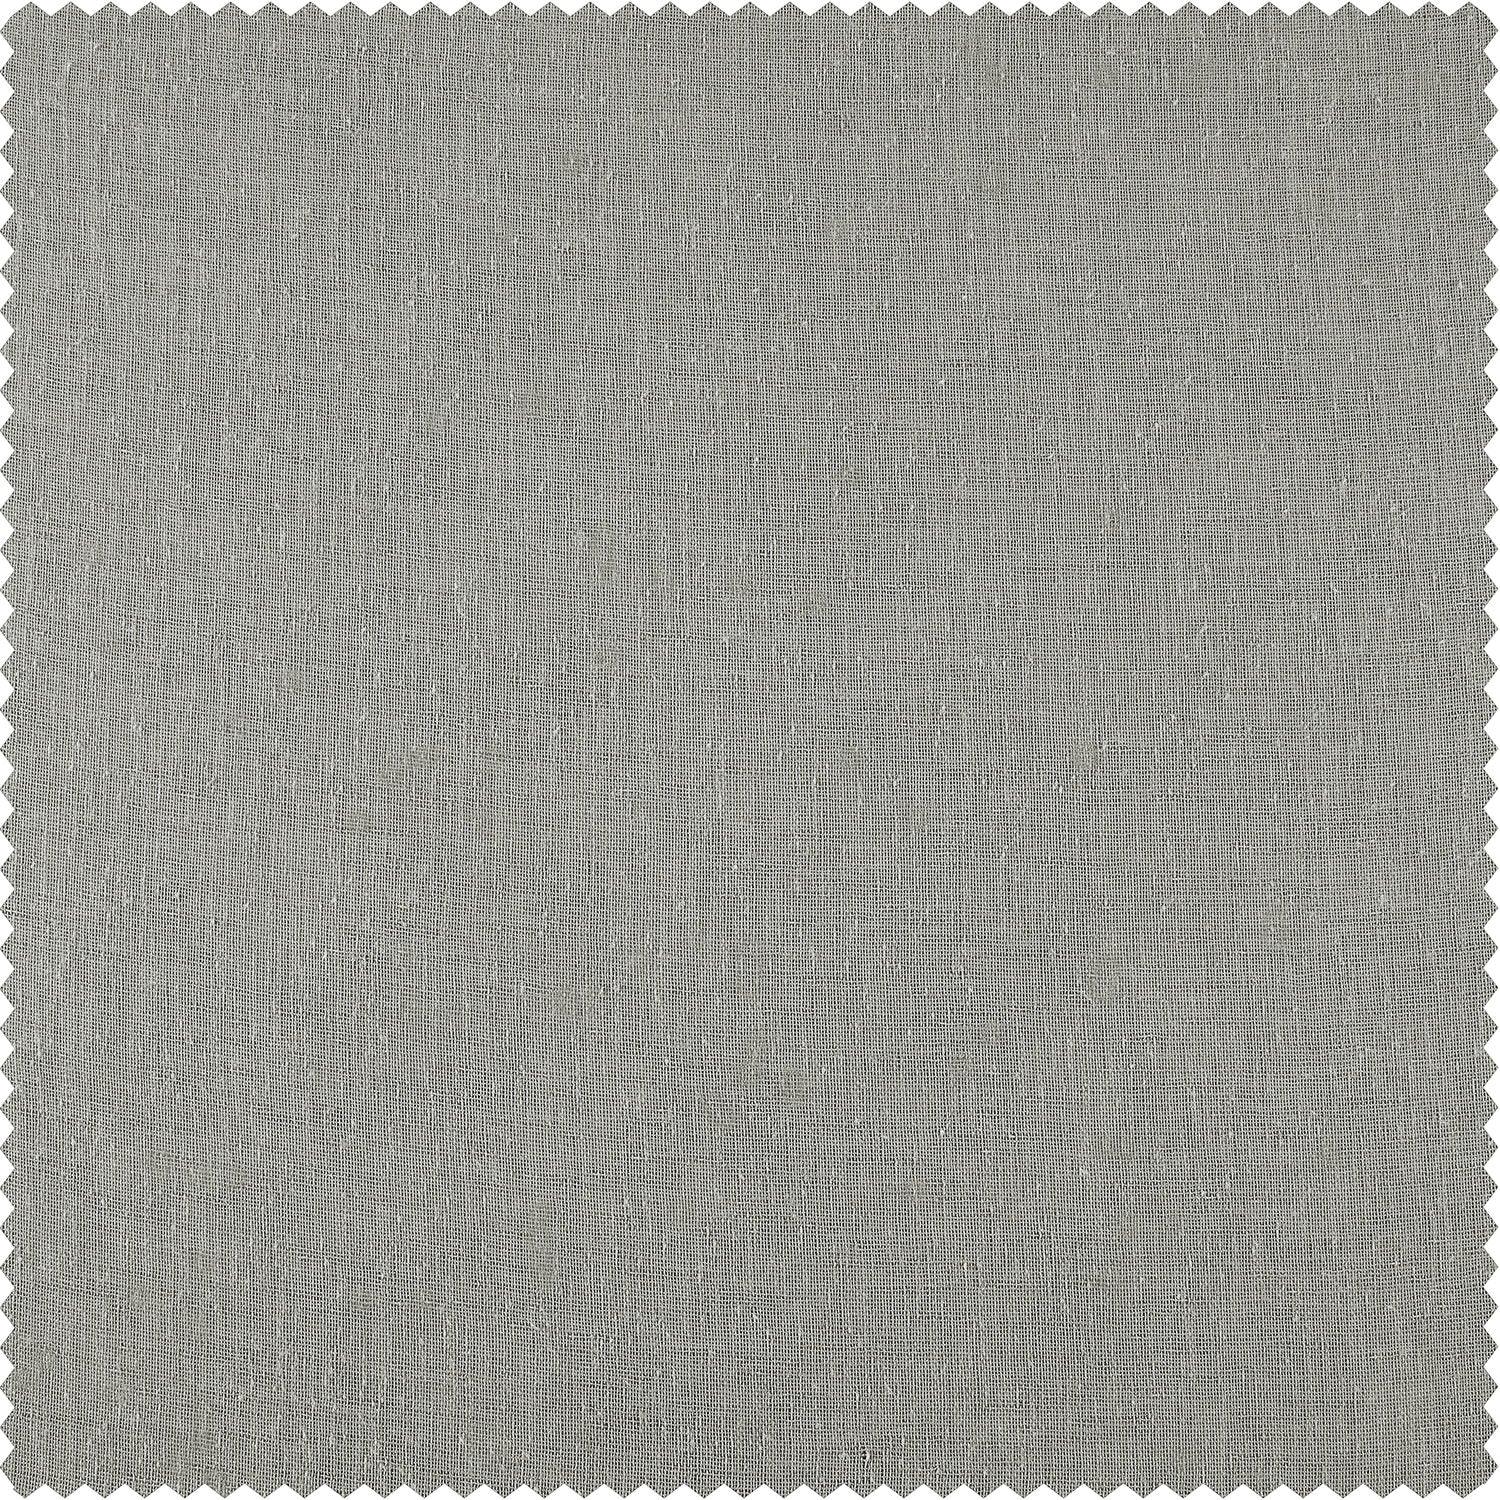 Alto Grey Solid Linen Sheer Curtain Pair (2 Panels)